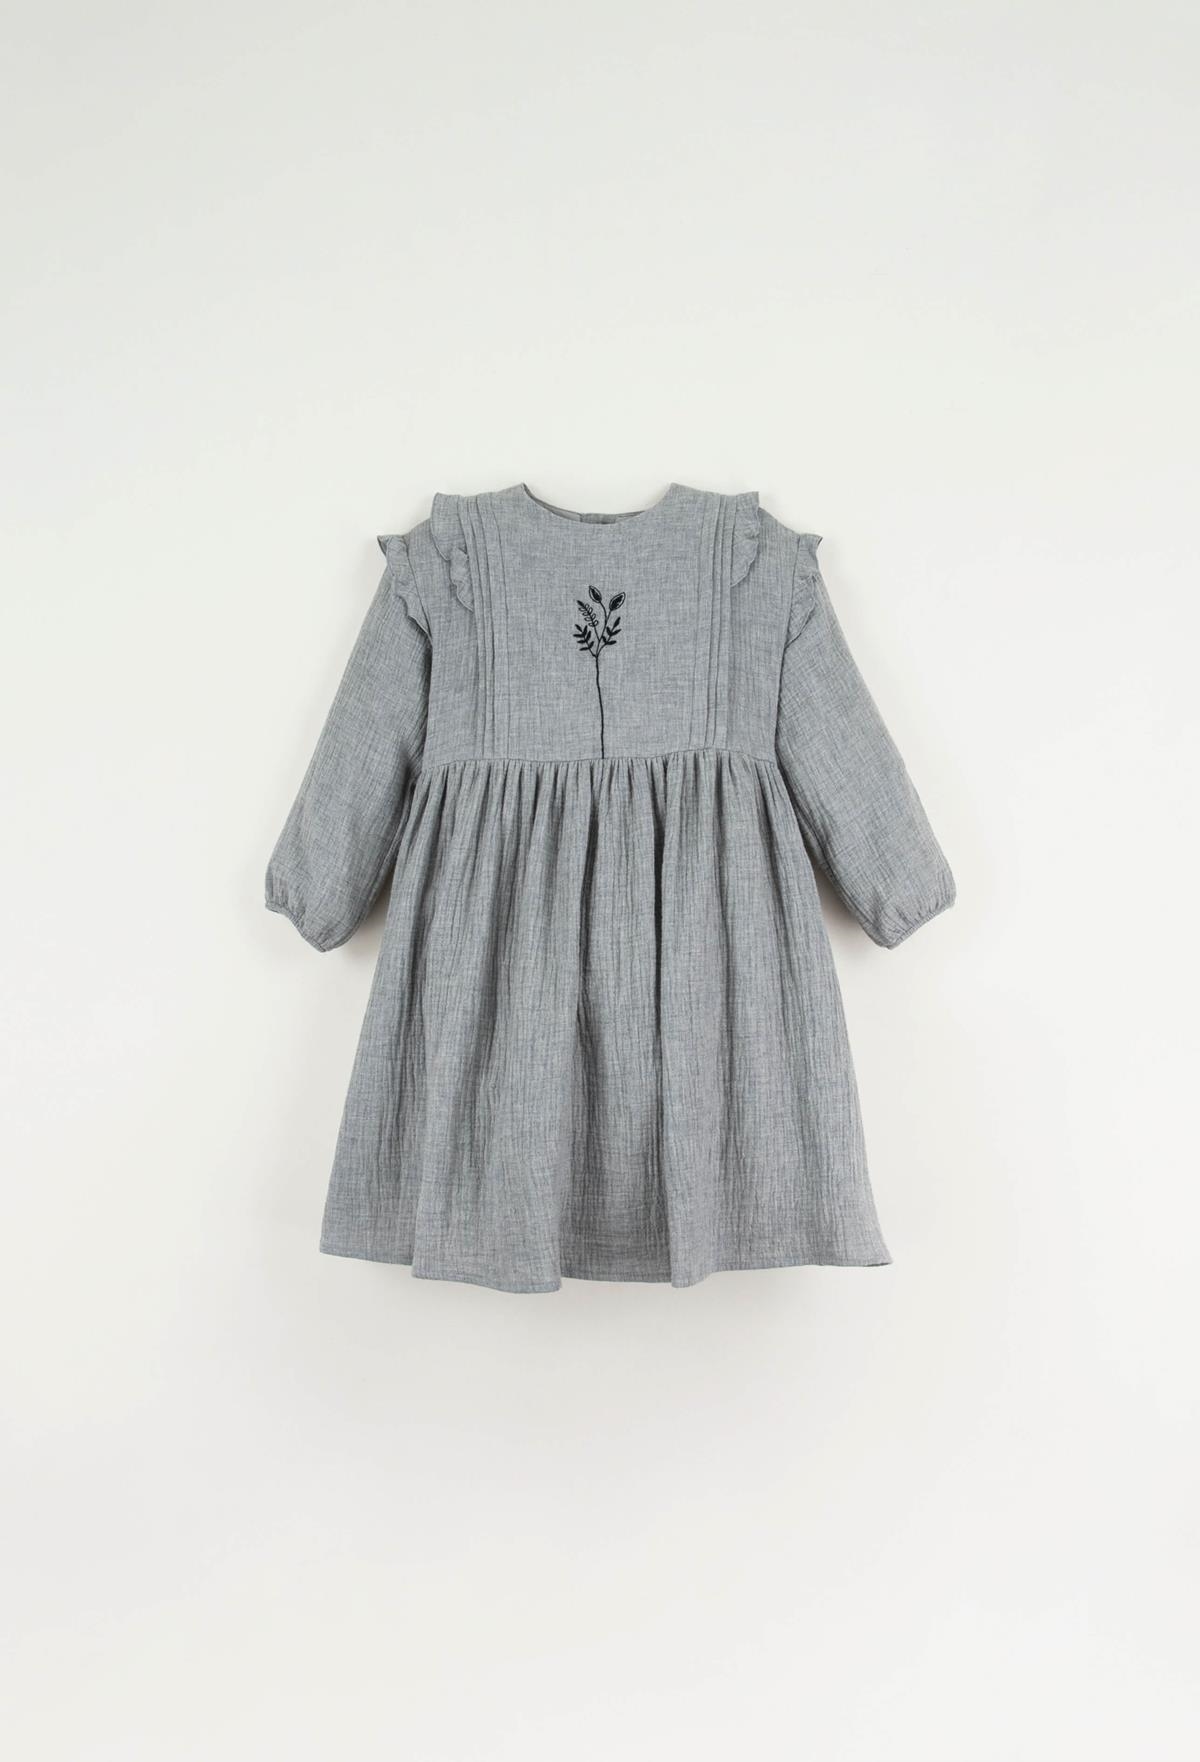 Mod.32.4 Light grey embroidered dress with pintucks | AW22.23 Mod.32.4 Light grey embroidered dress with pintucks